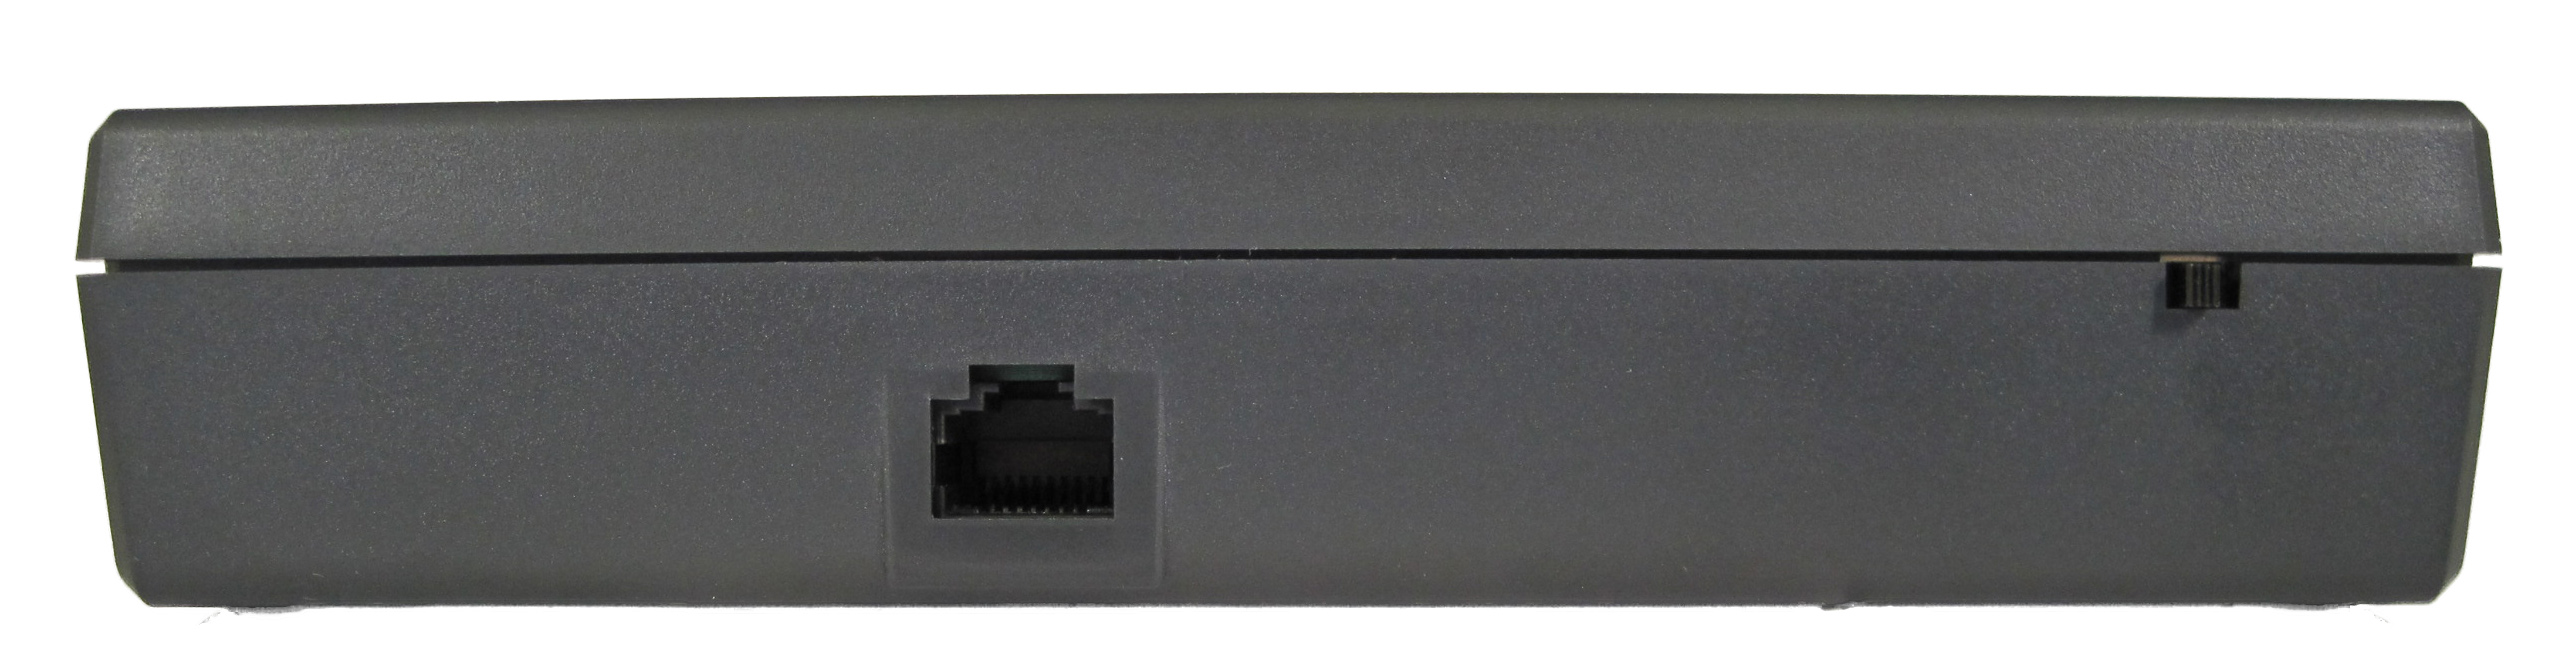 ControlPad CP48-USB